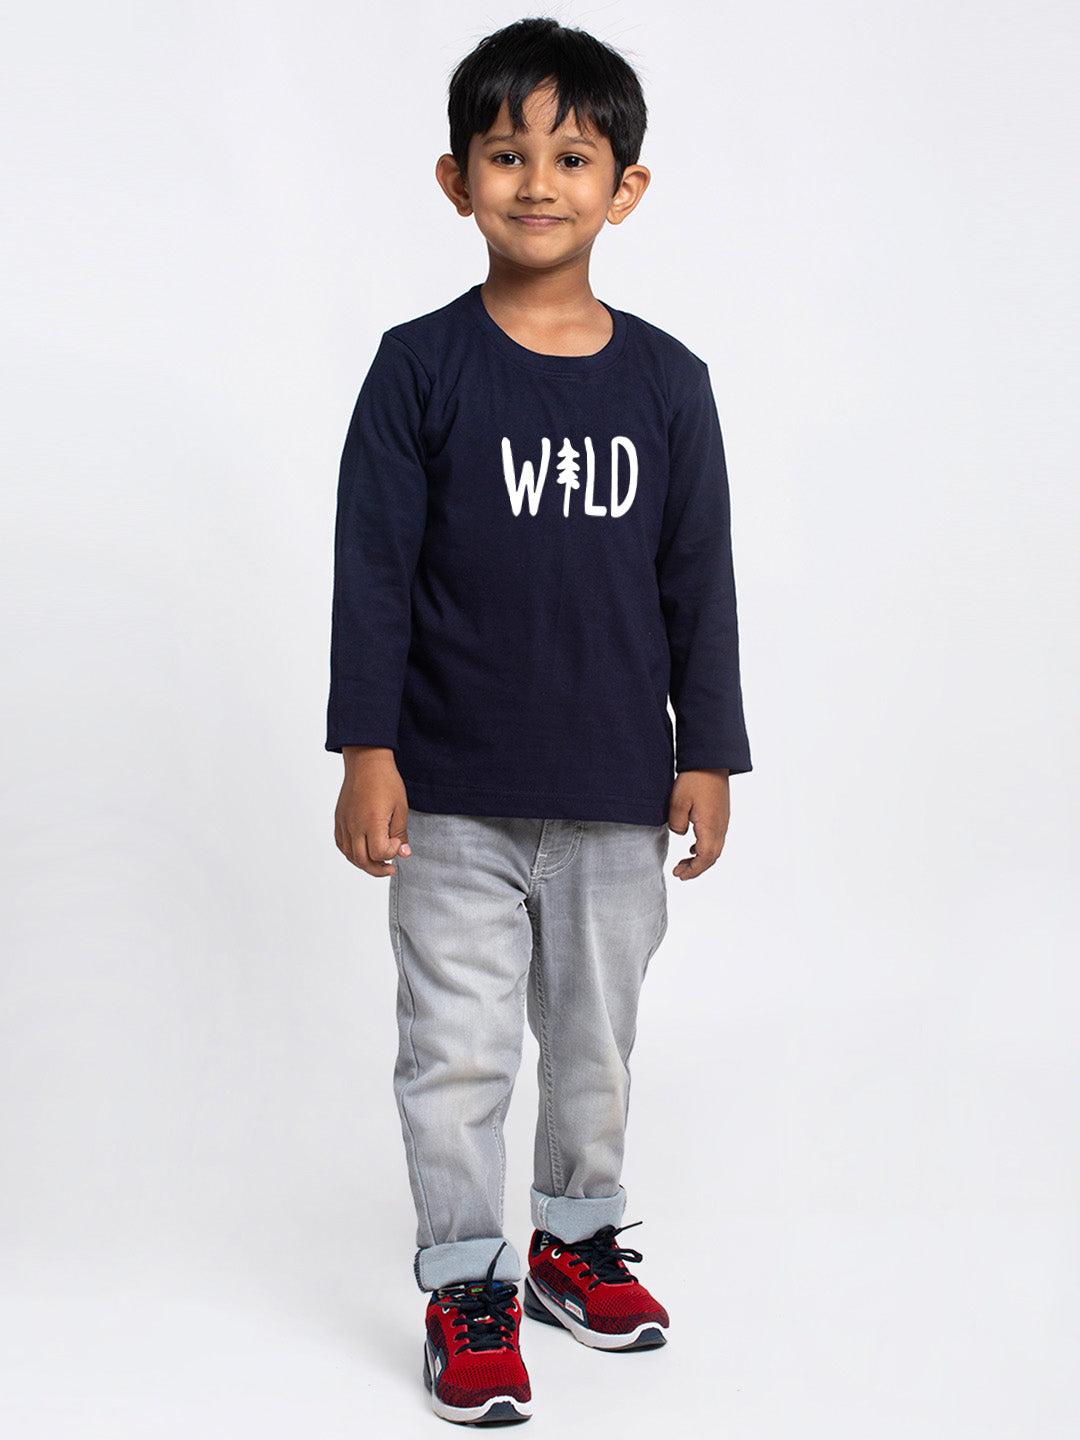 Kids Wild printed full sleeves t-shirt - Friskers